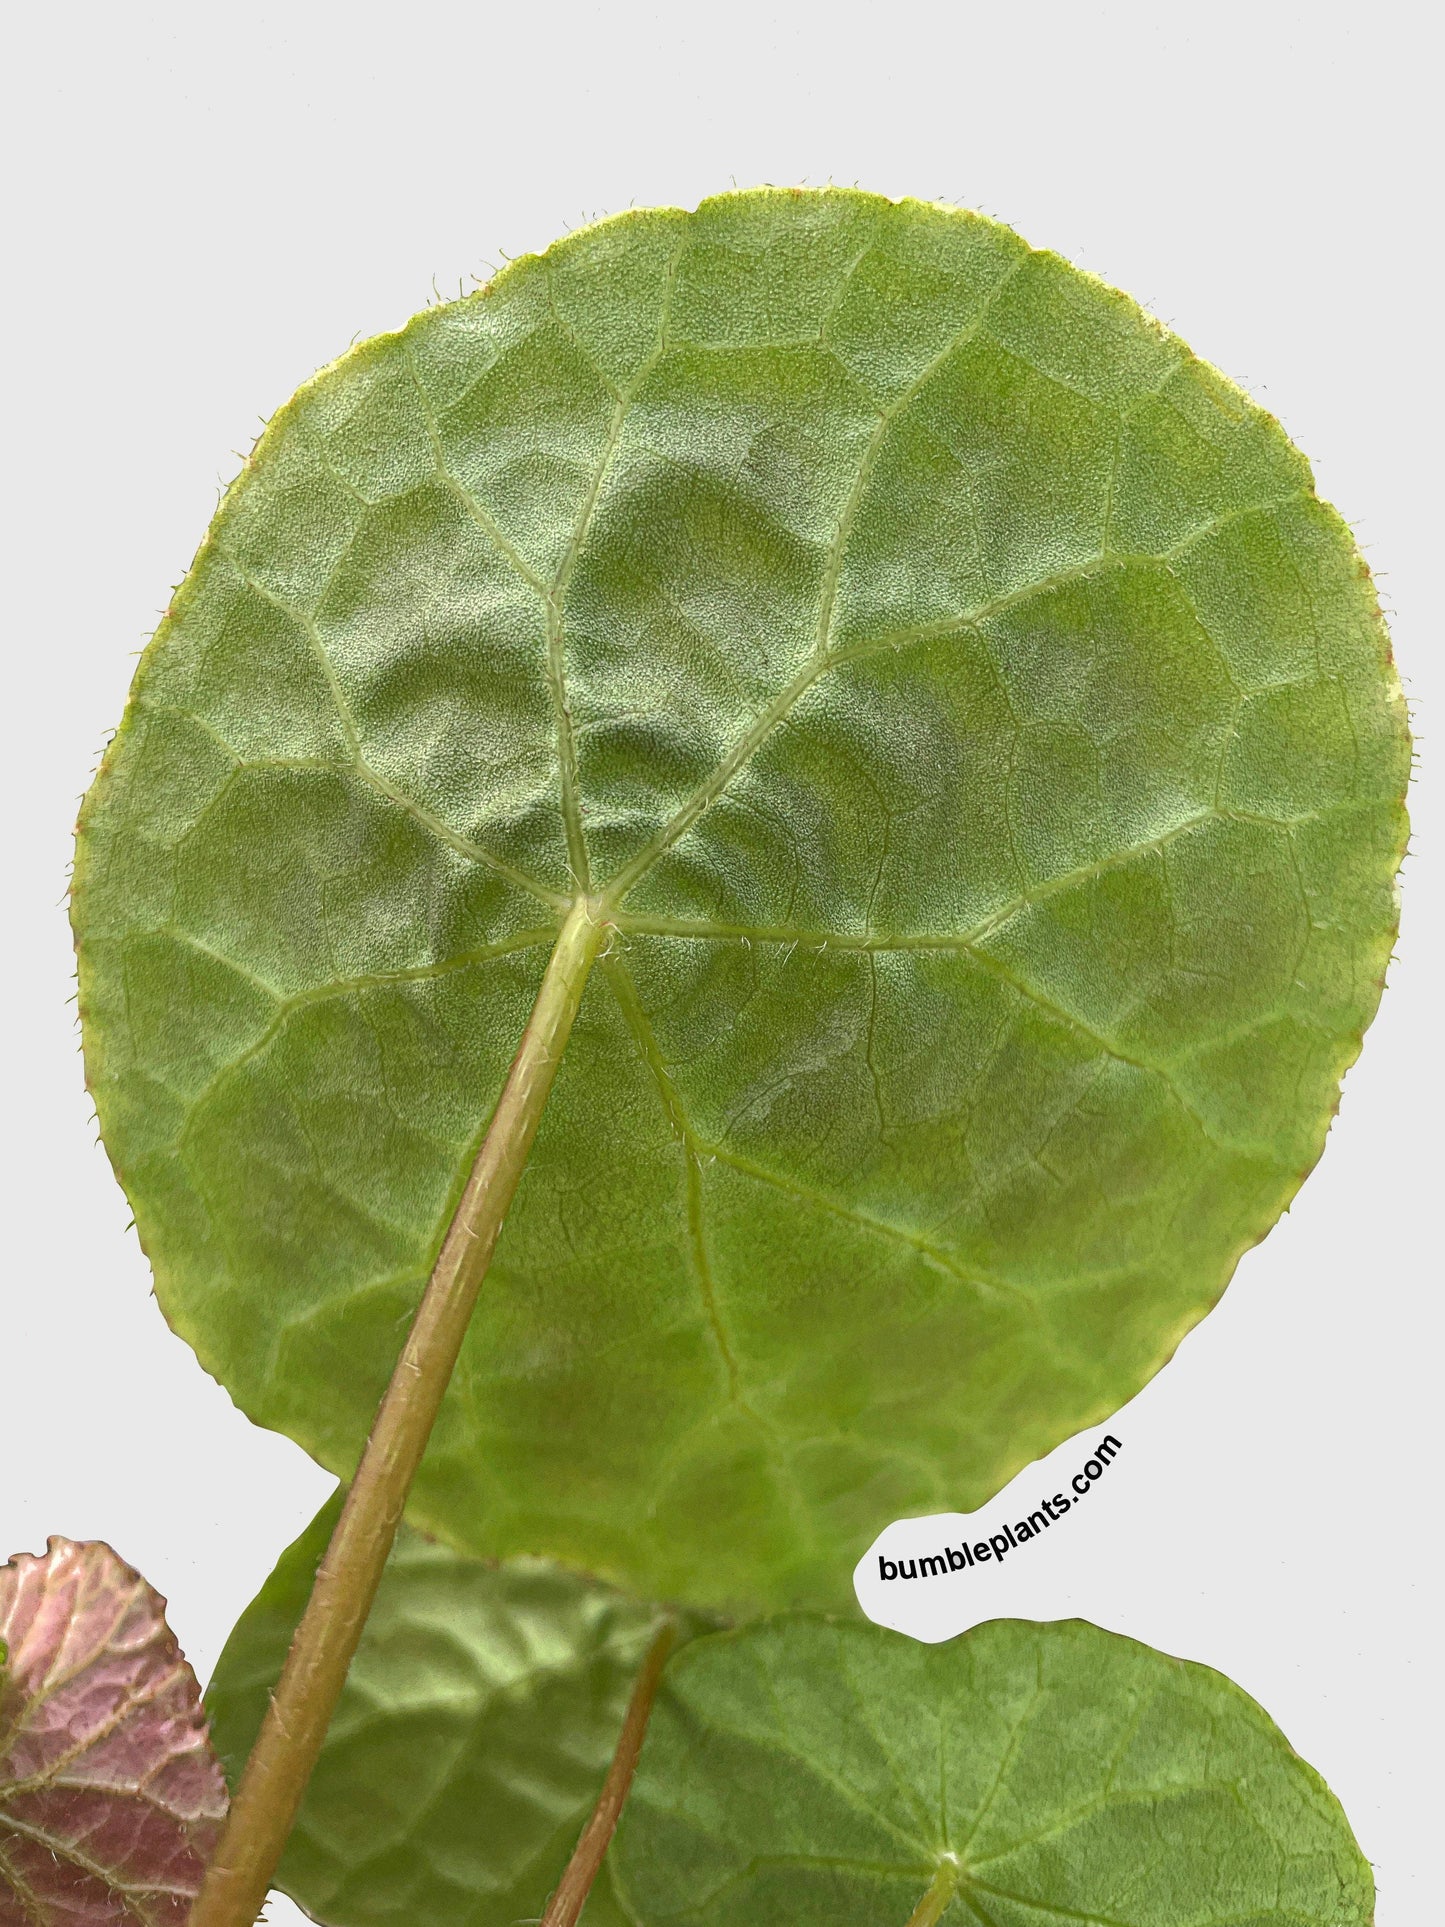 Begonia Natunaensis